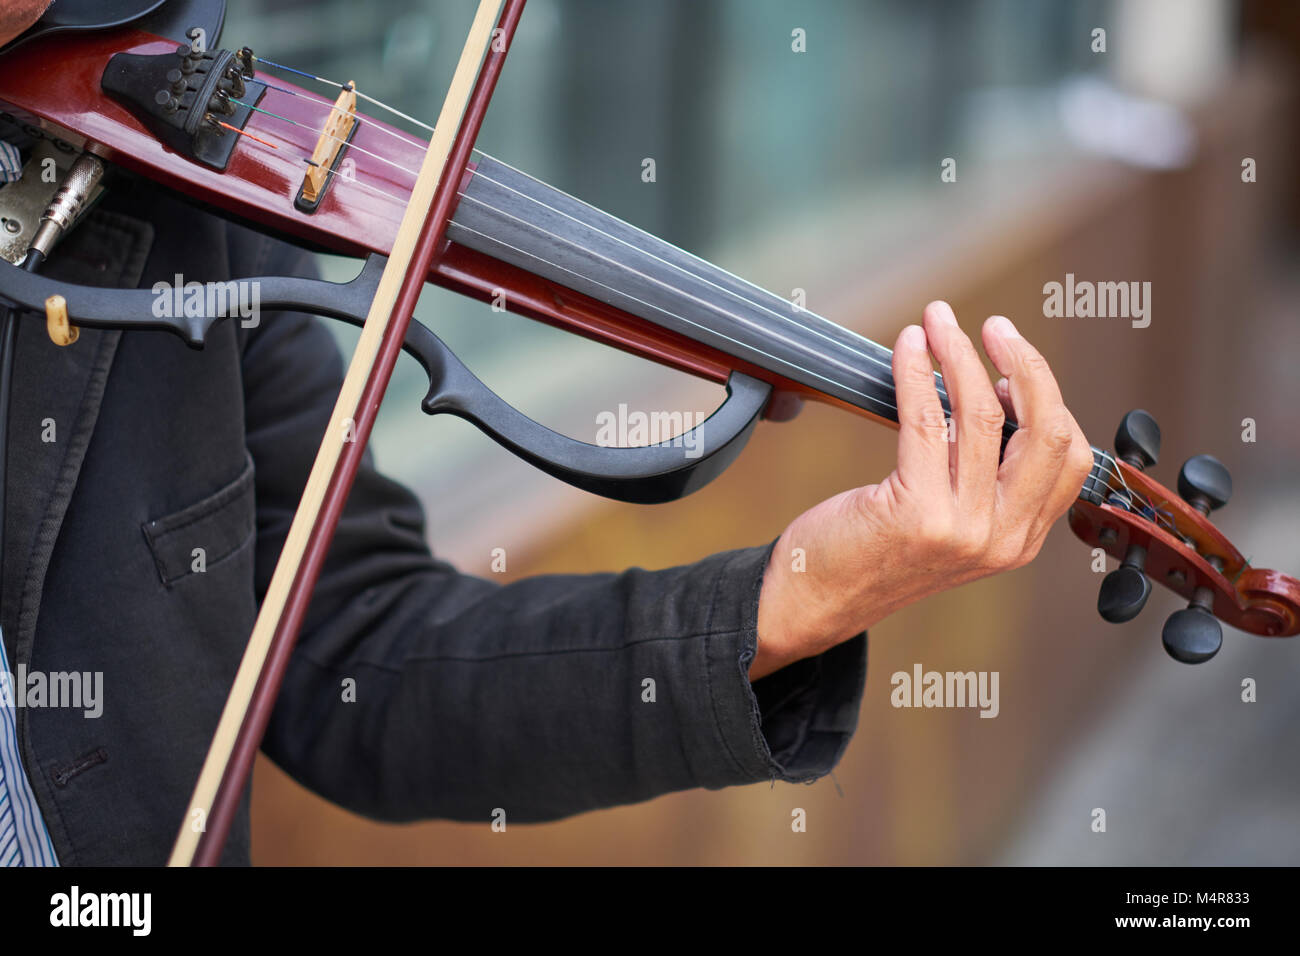 Street musician playing a modern violin Stock Photo - Alamy